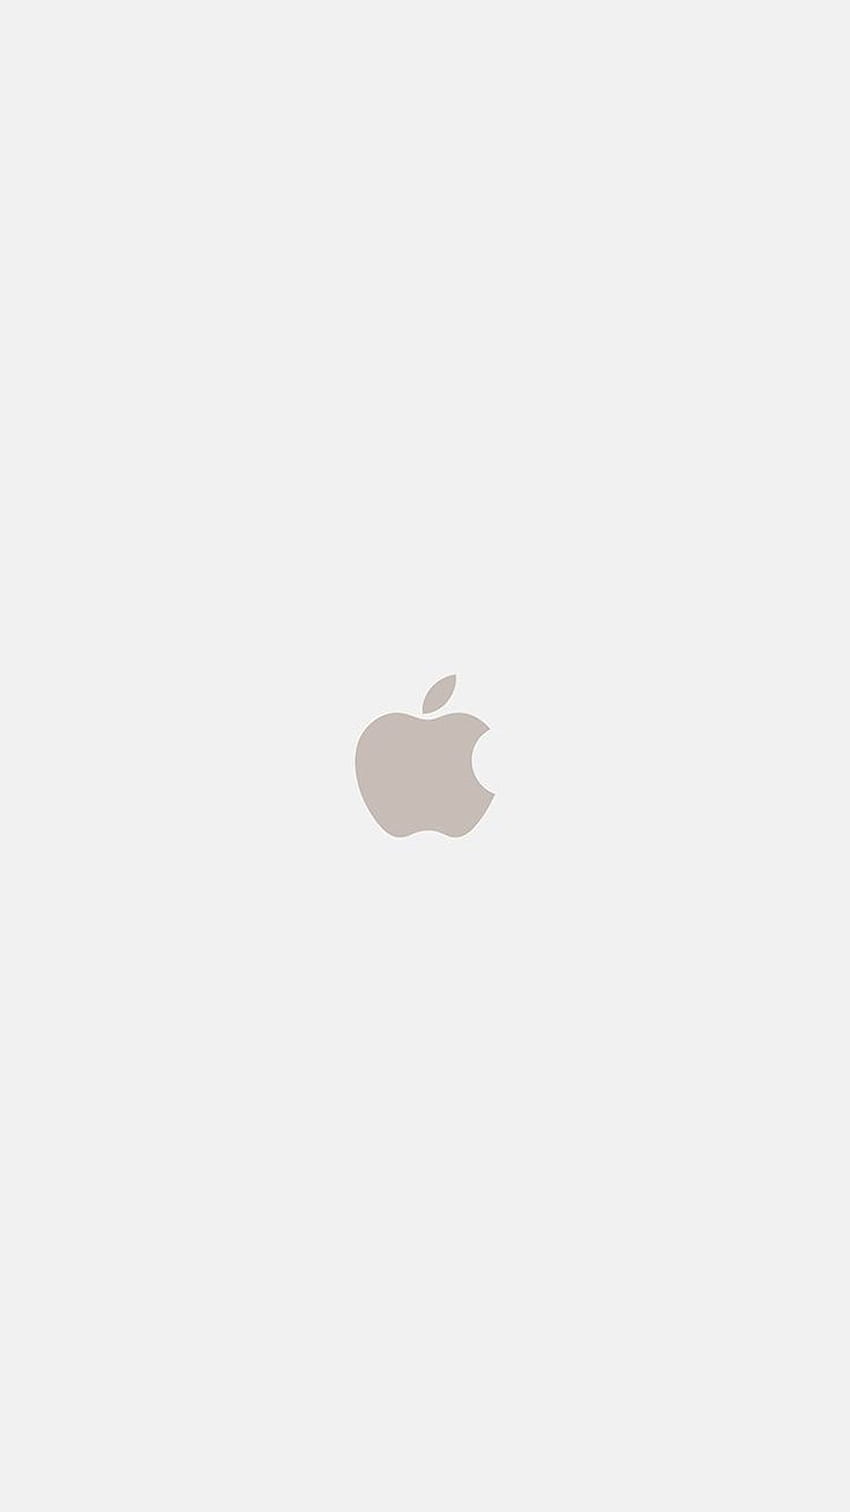 Clean apple logo for ios 12 a в 2019 г. Apple logo iphone, Apple logo ...